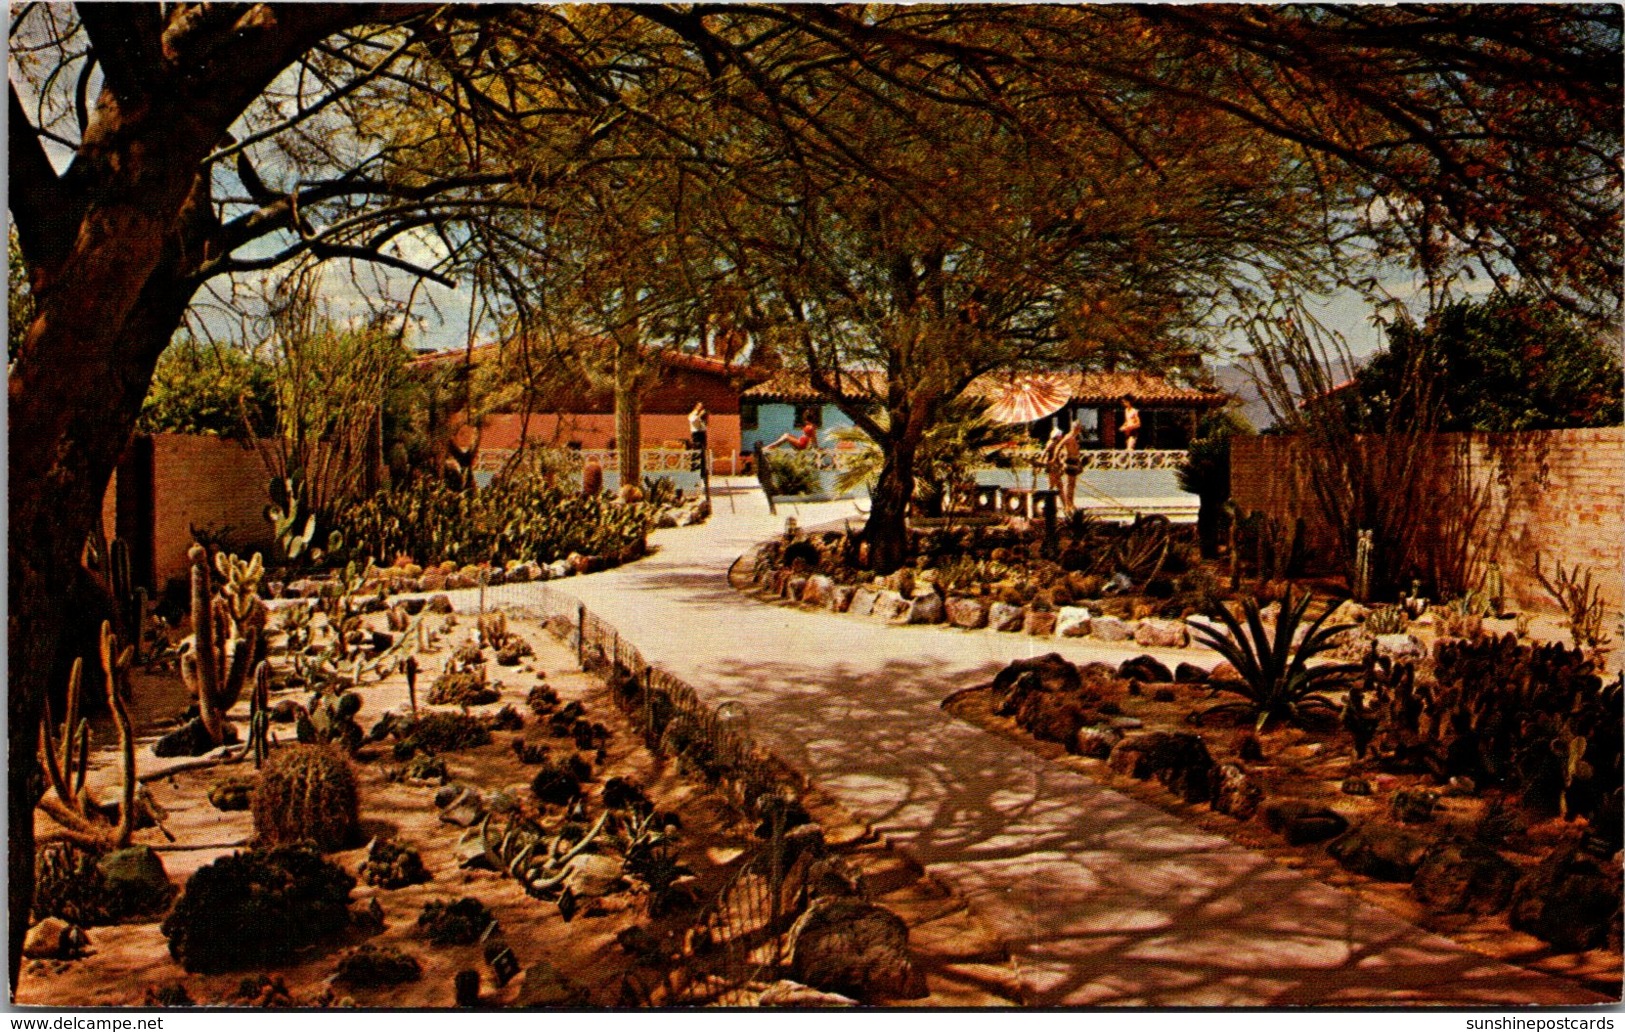 Arizona Tucson Ghost Ranch Lodge Cactus Garden - Tucson